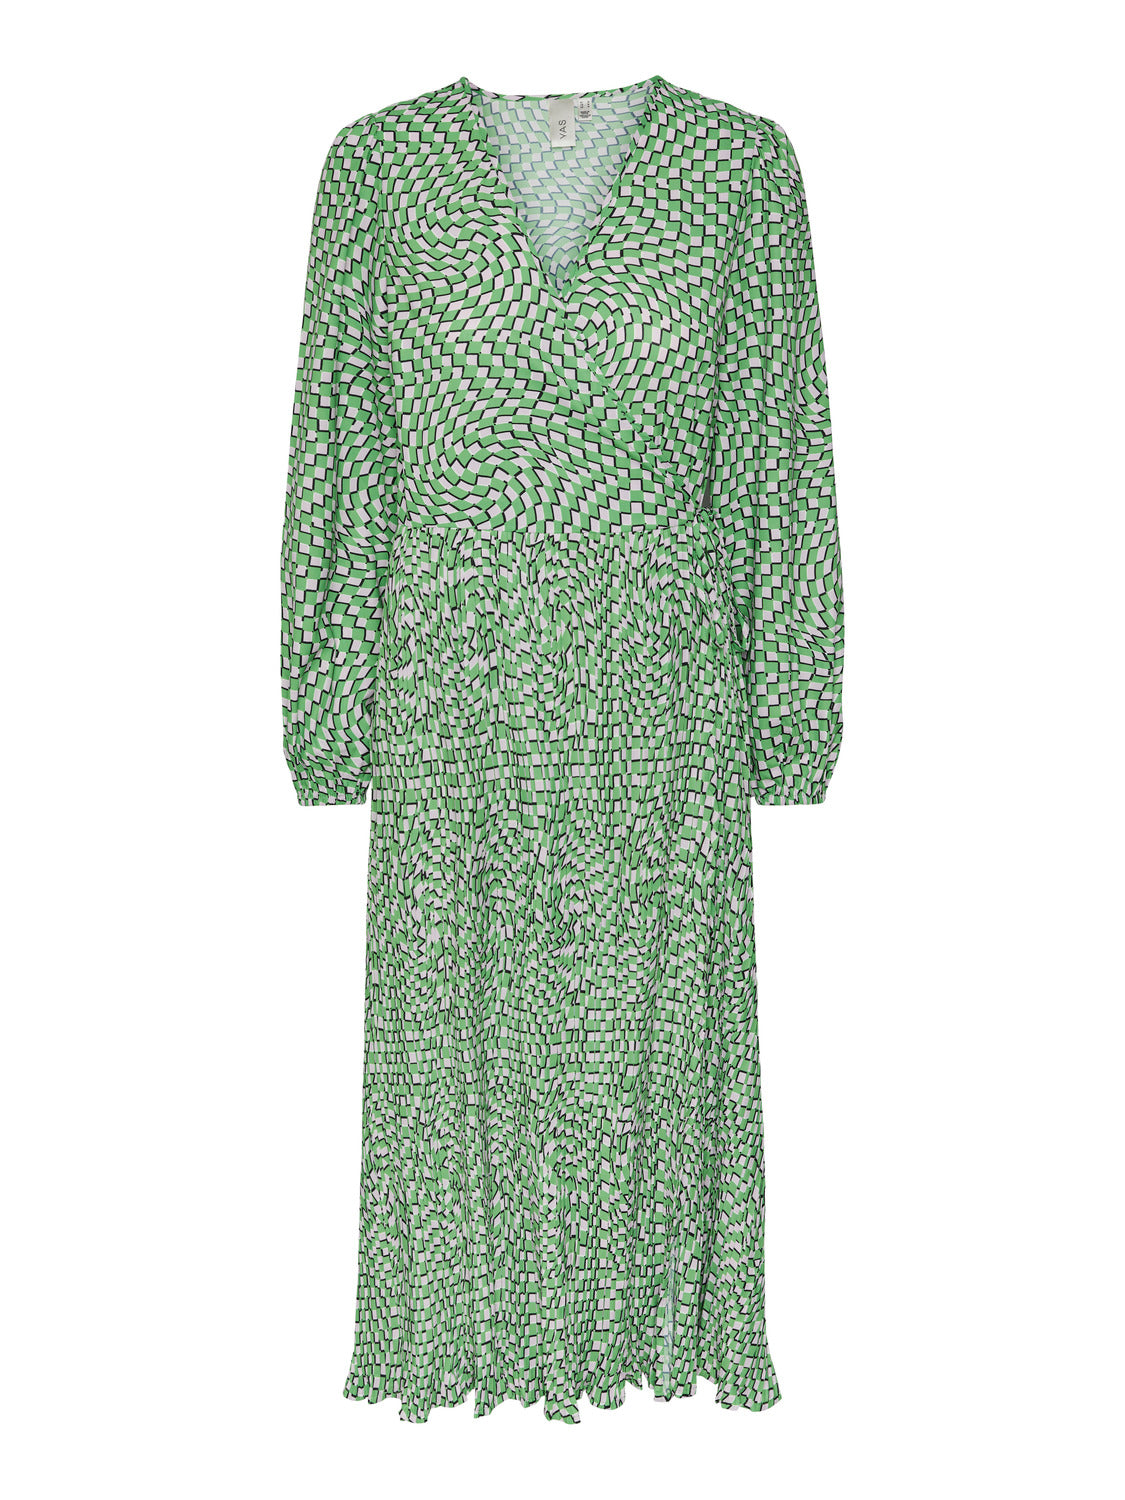 YASSTEPS Dress - Classic Green